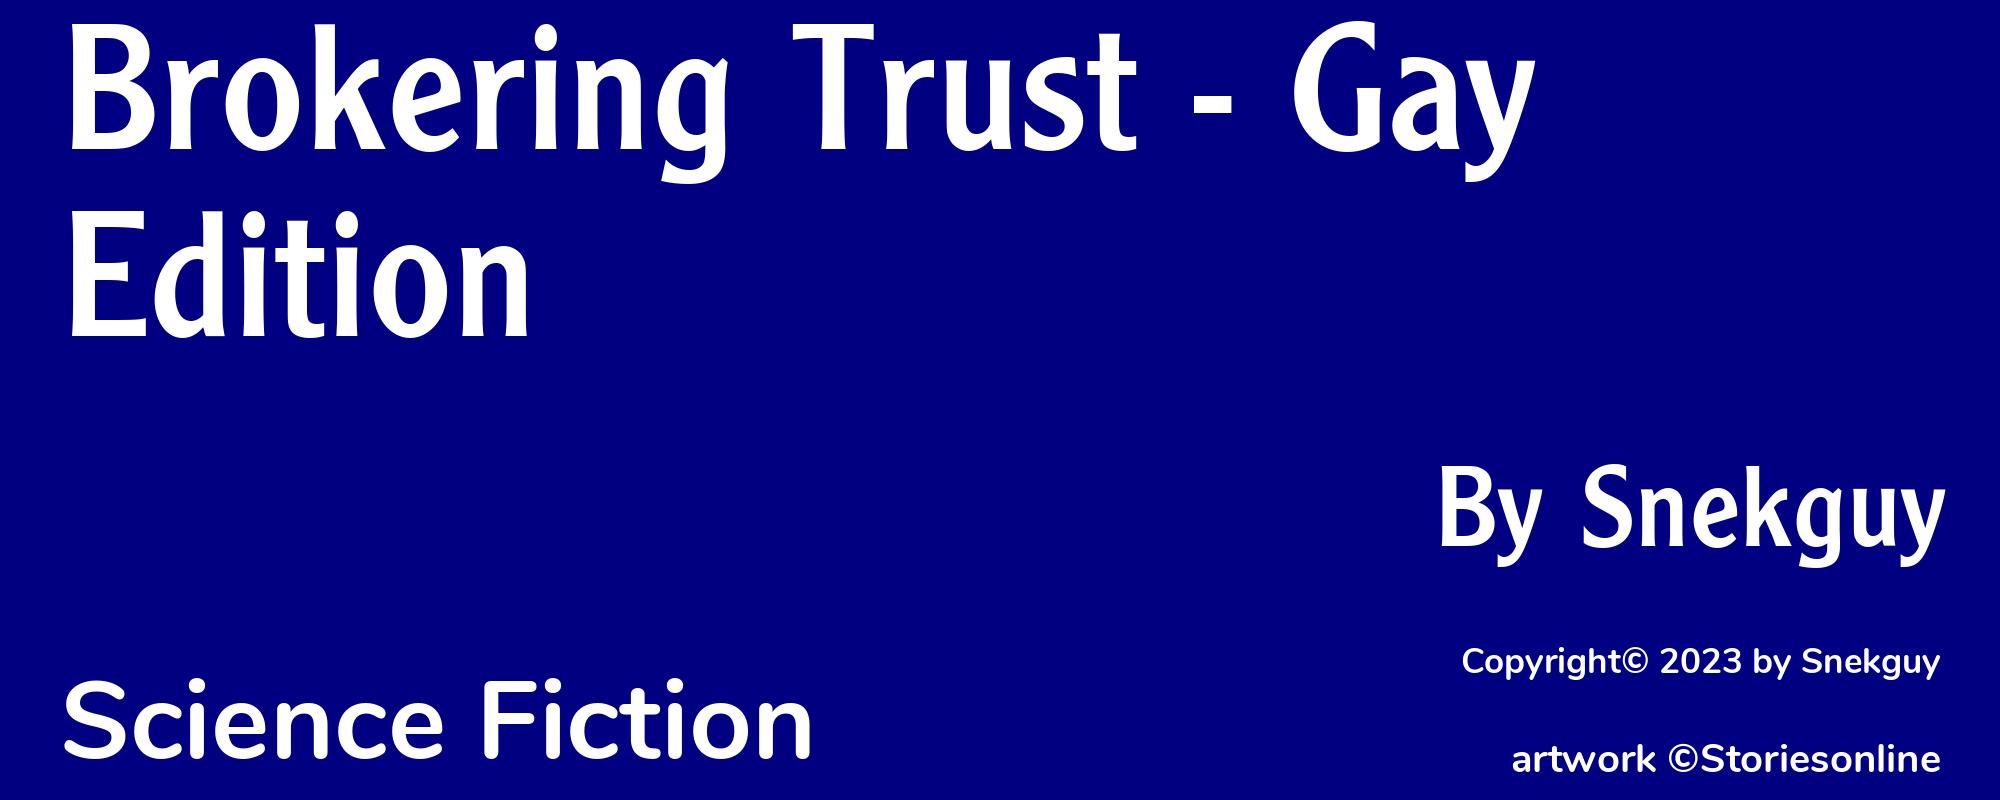 Brokering Trust - Gay Edition - Cover